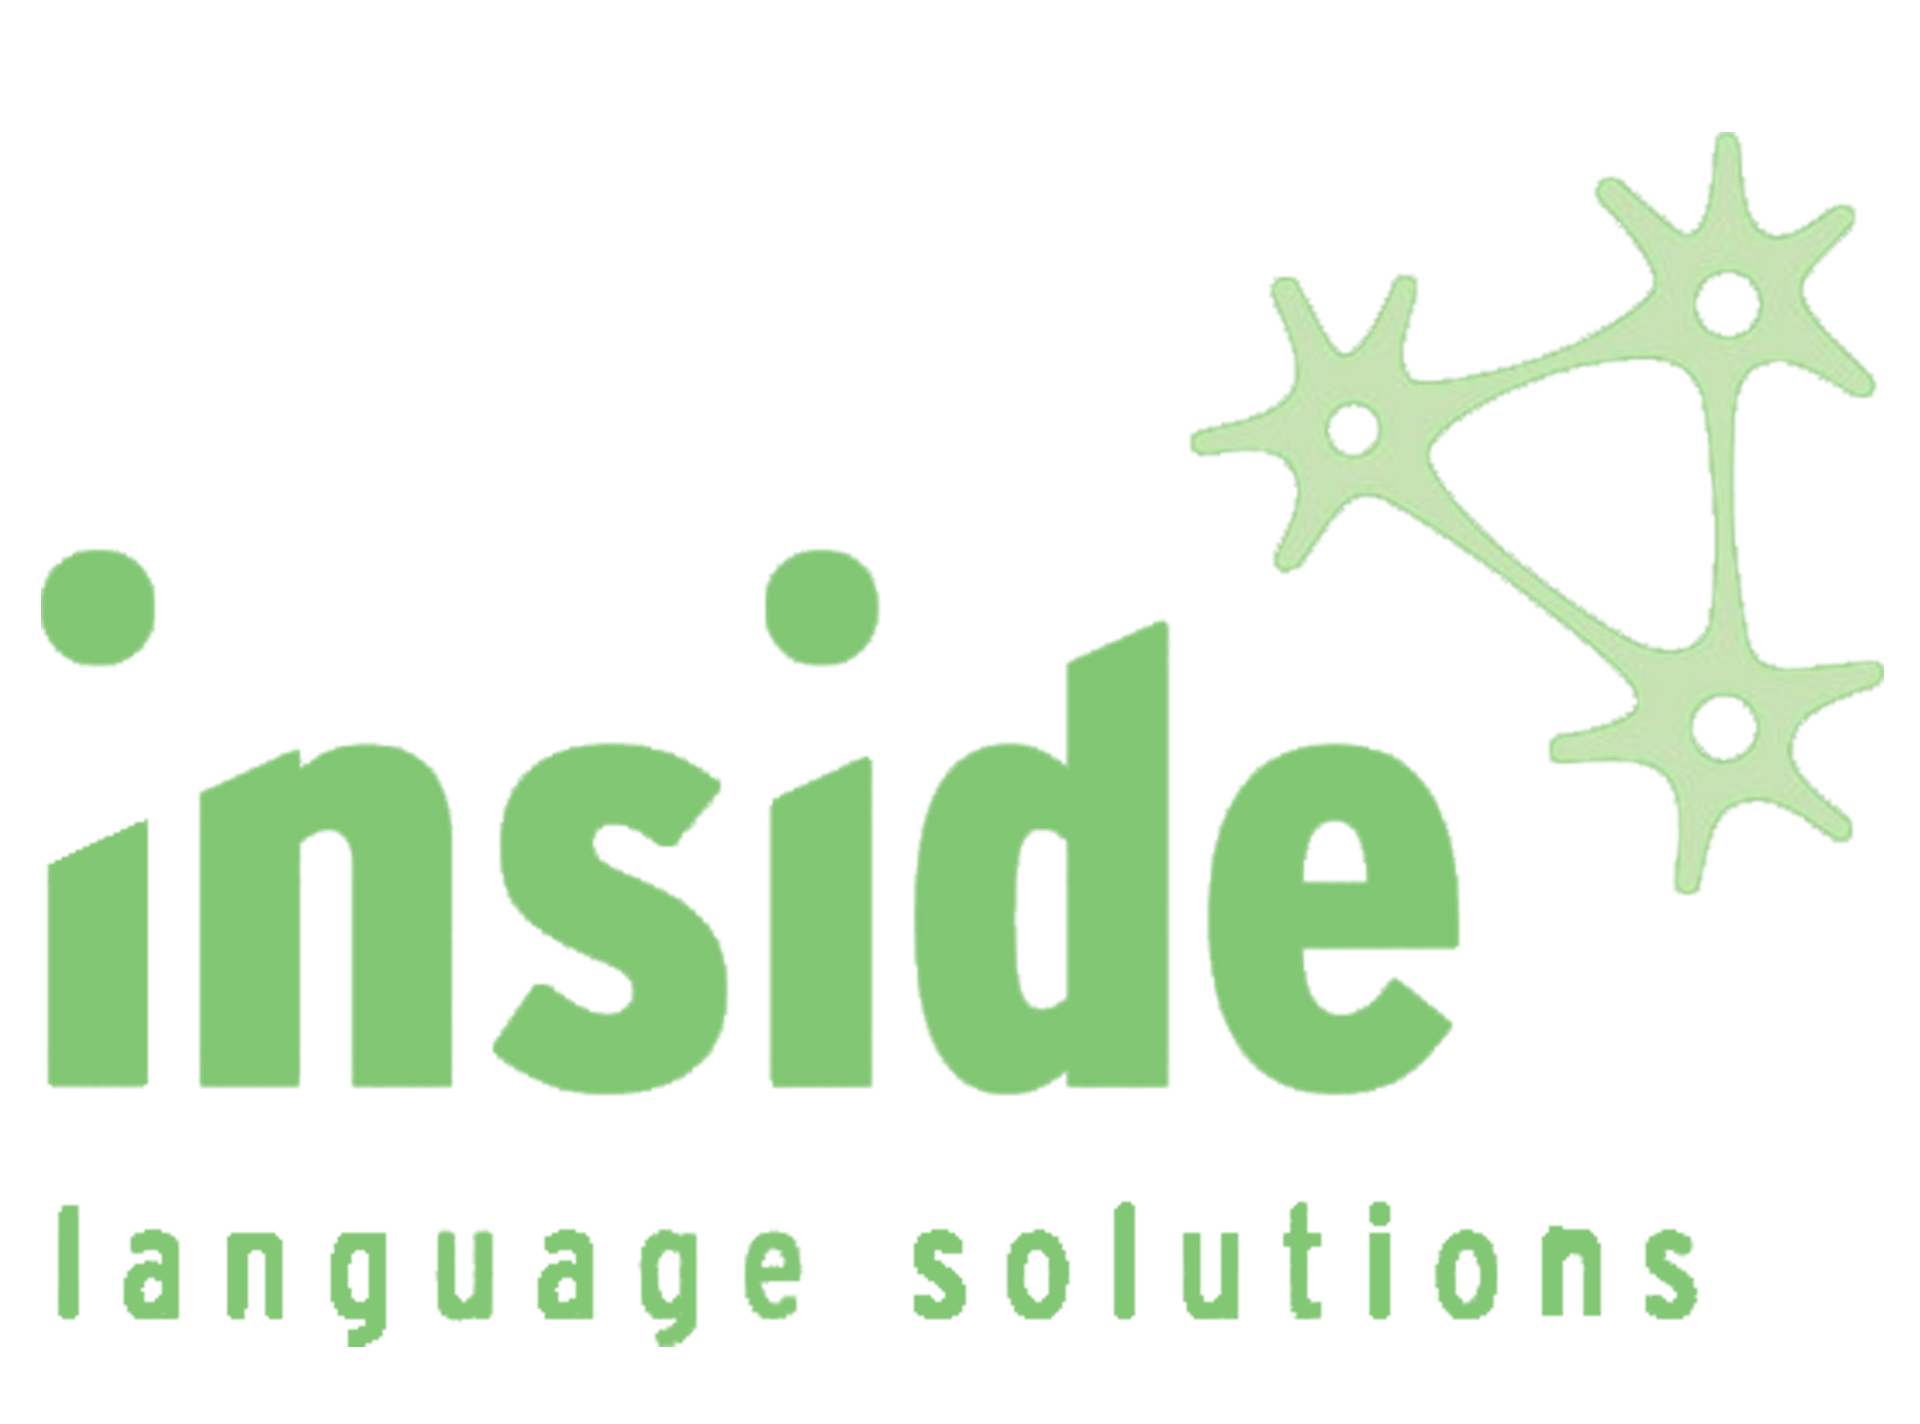 Inside Language Solutions